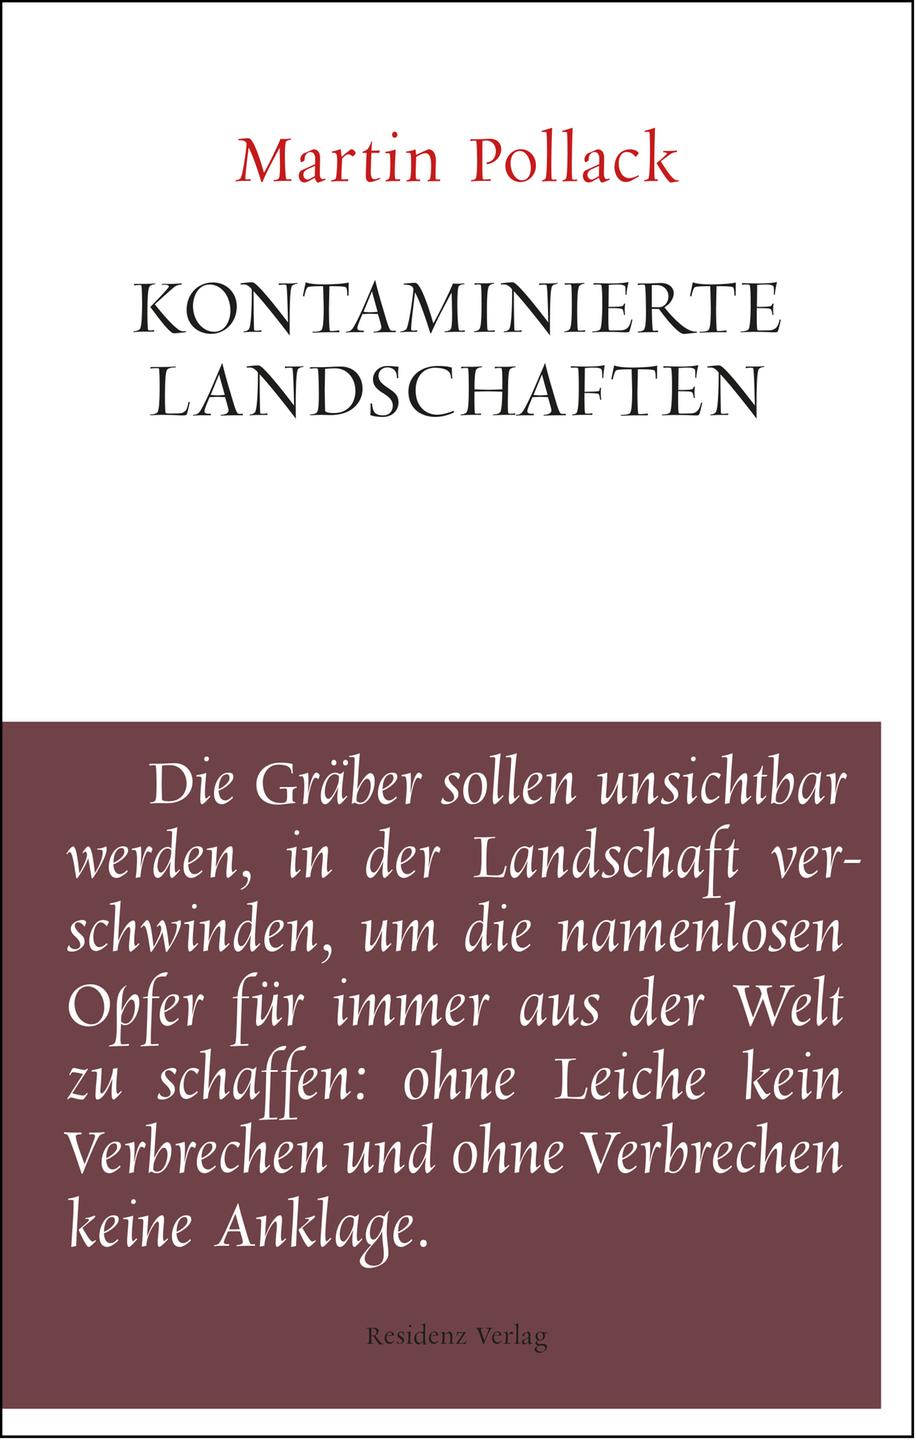 Lesart-Cover: Martin Pollack "Kontaminierte Landschaften"